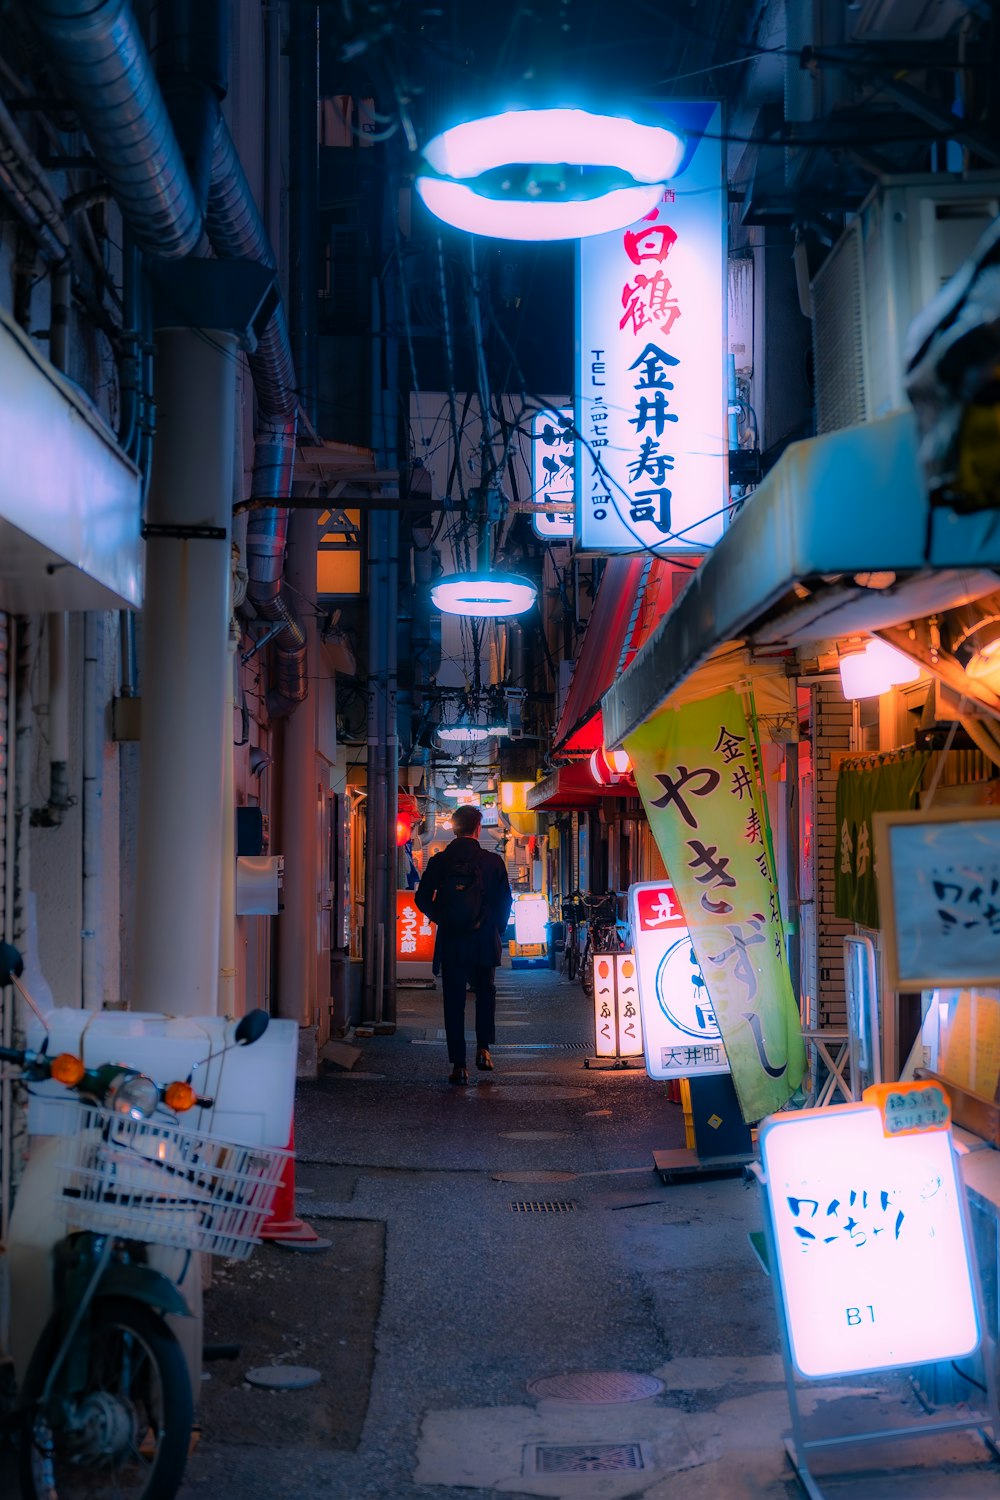 a man walking down an alley way at night